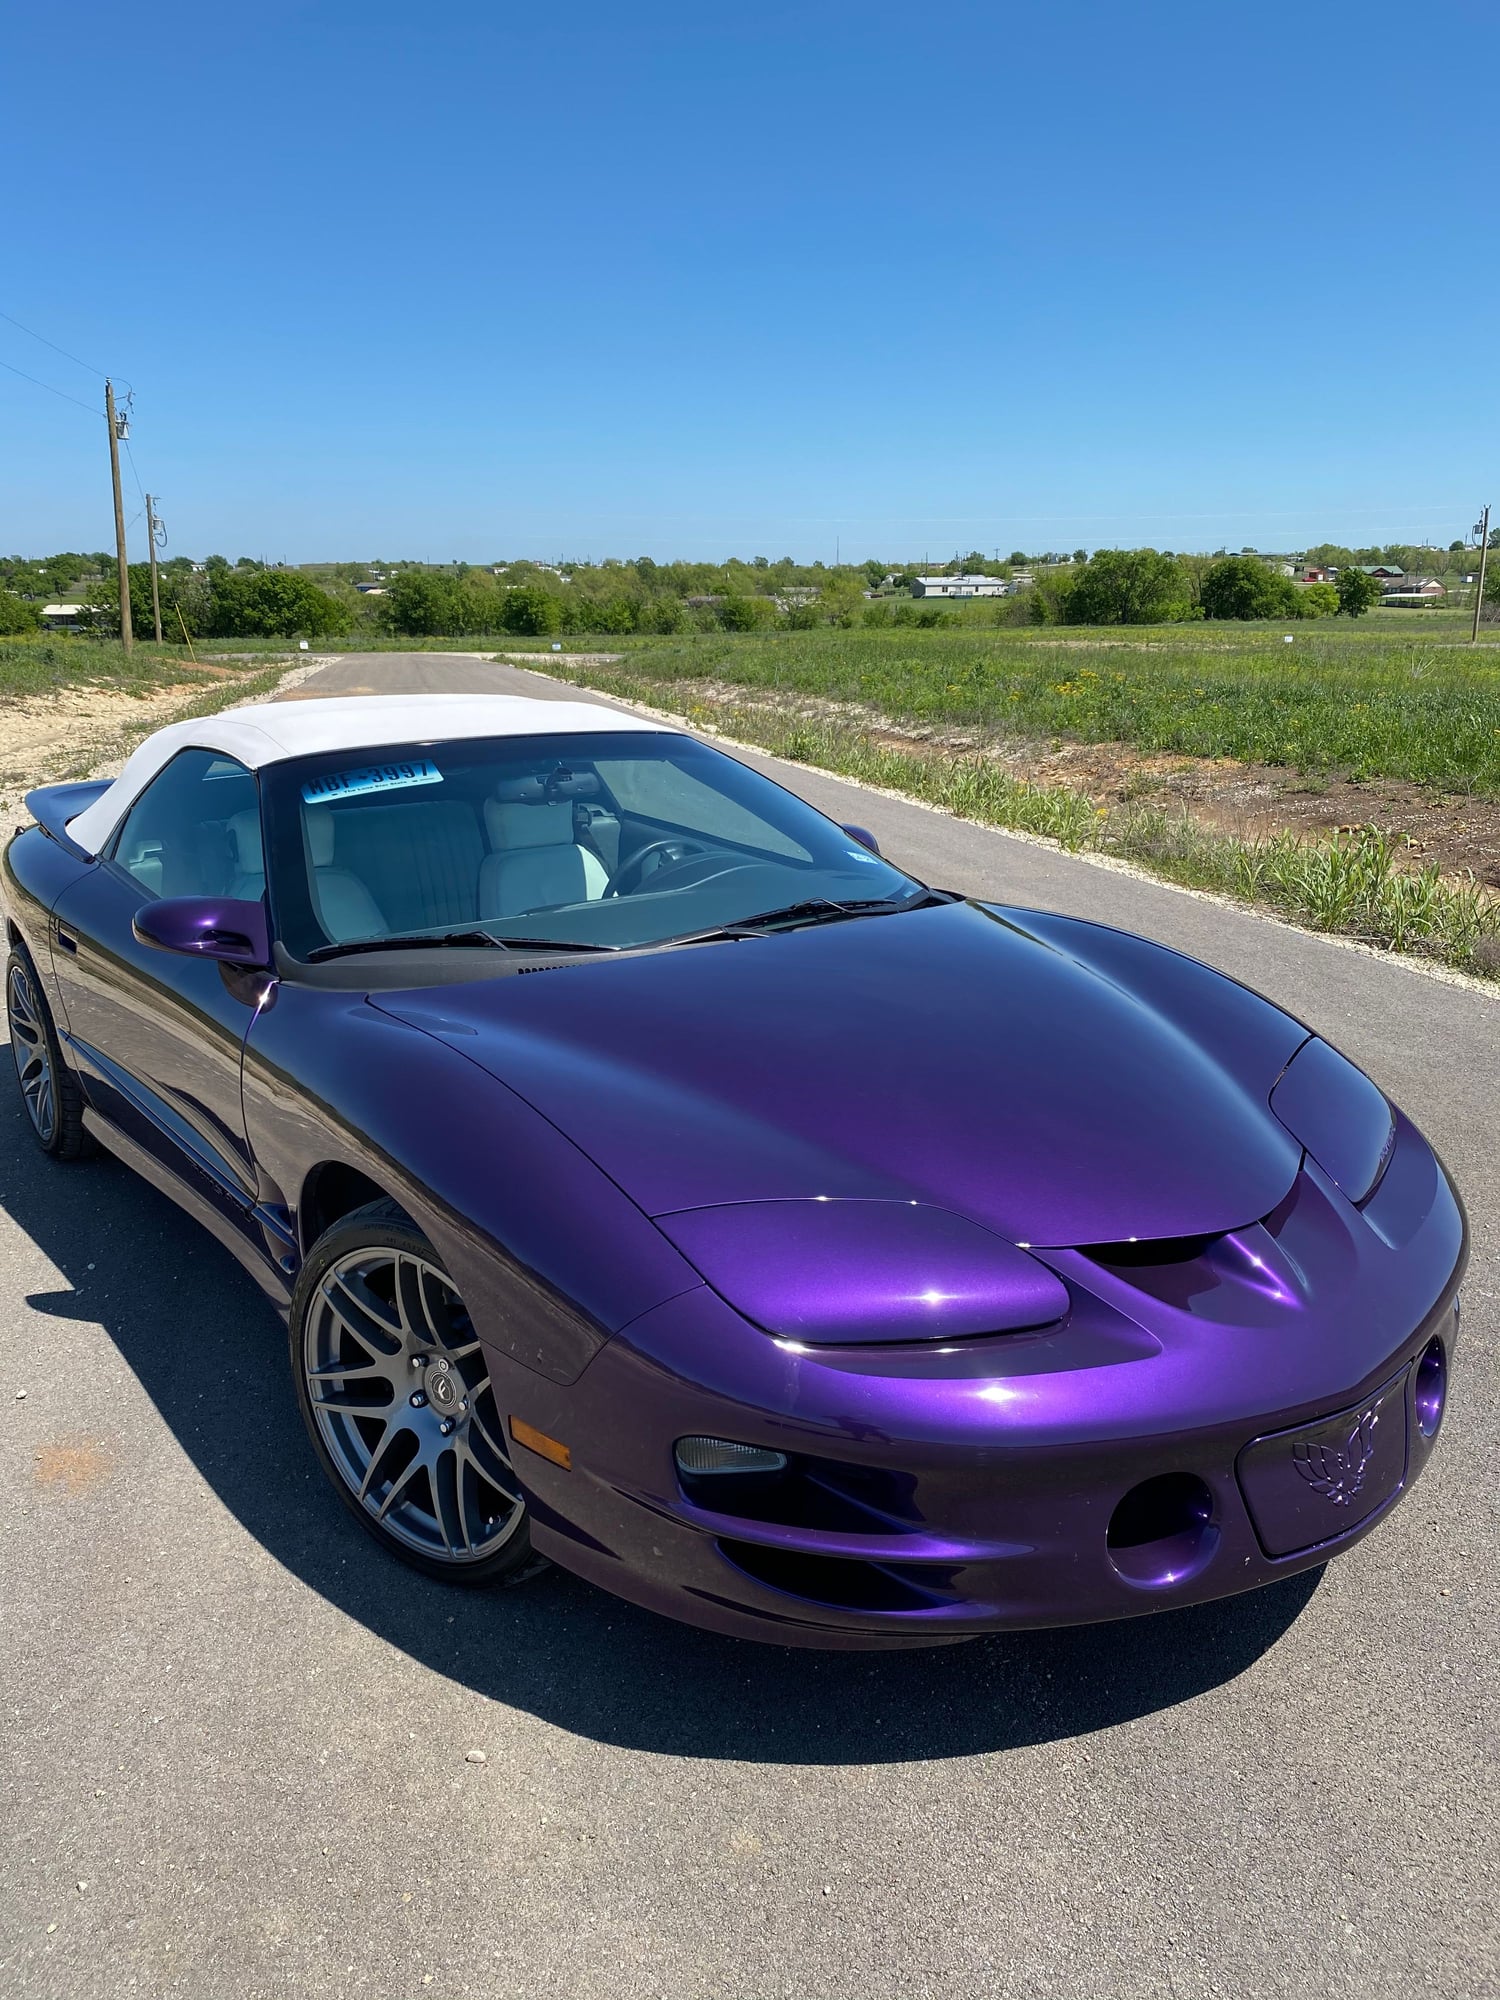 1998 Pontiac Firebird - BPM Trans Am Vert for sale - Used - VIN 2G2FV32G7W2217497 - 50,846 Miles - 8 cyl - 2WD - Automatic - Convertible - Purple - Joshua, TX 76058, United States